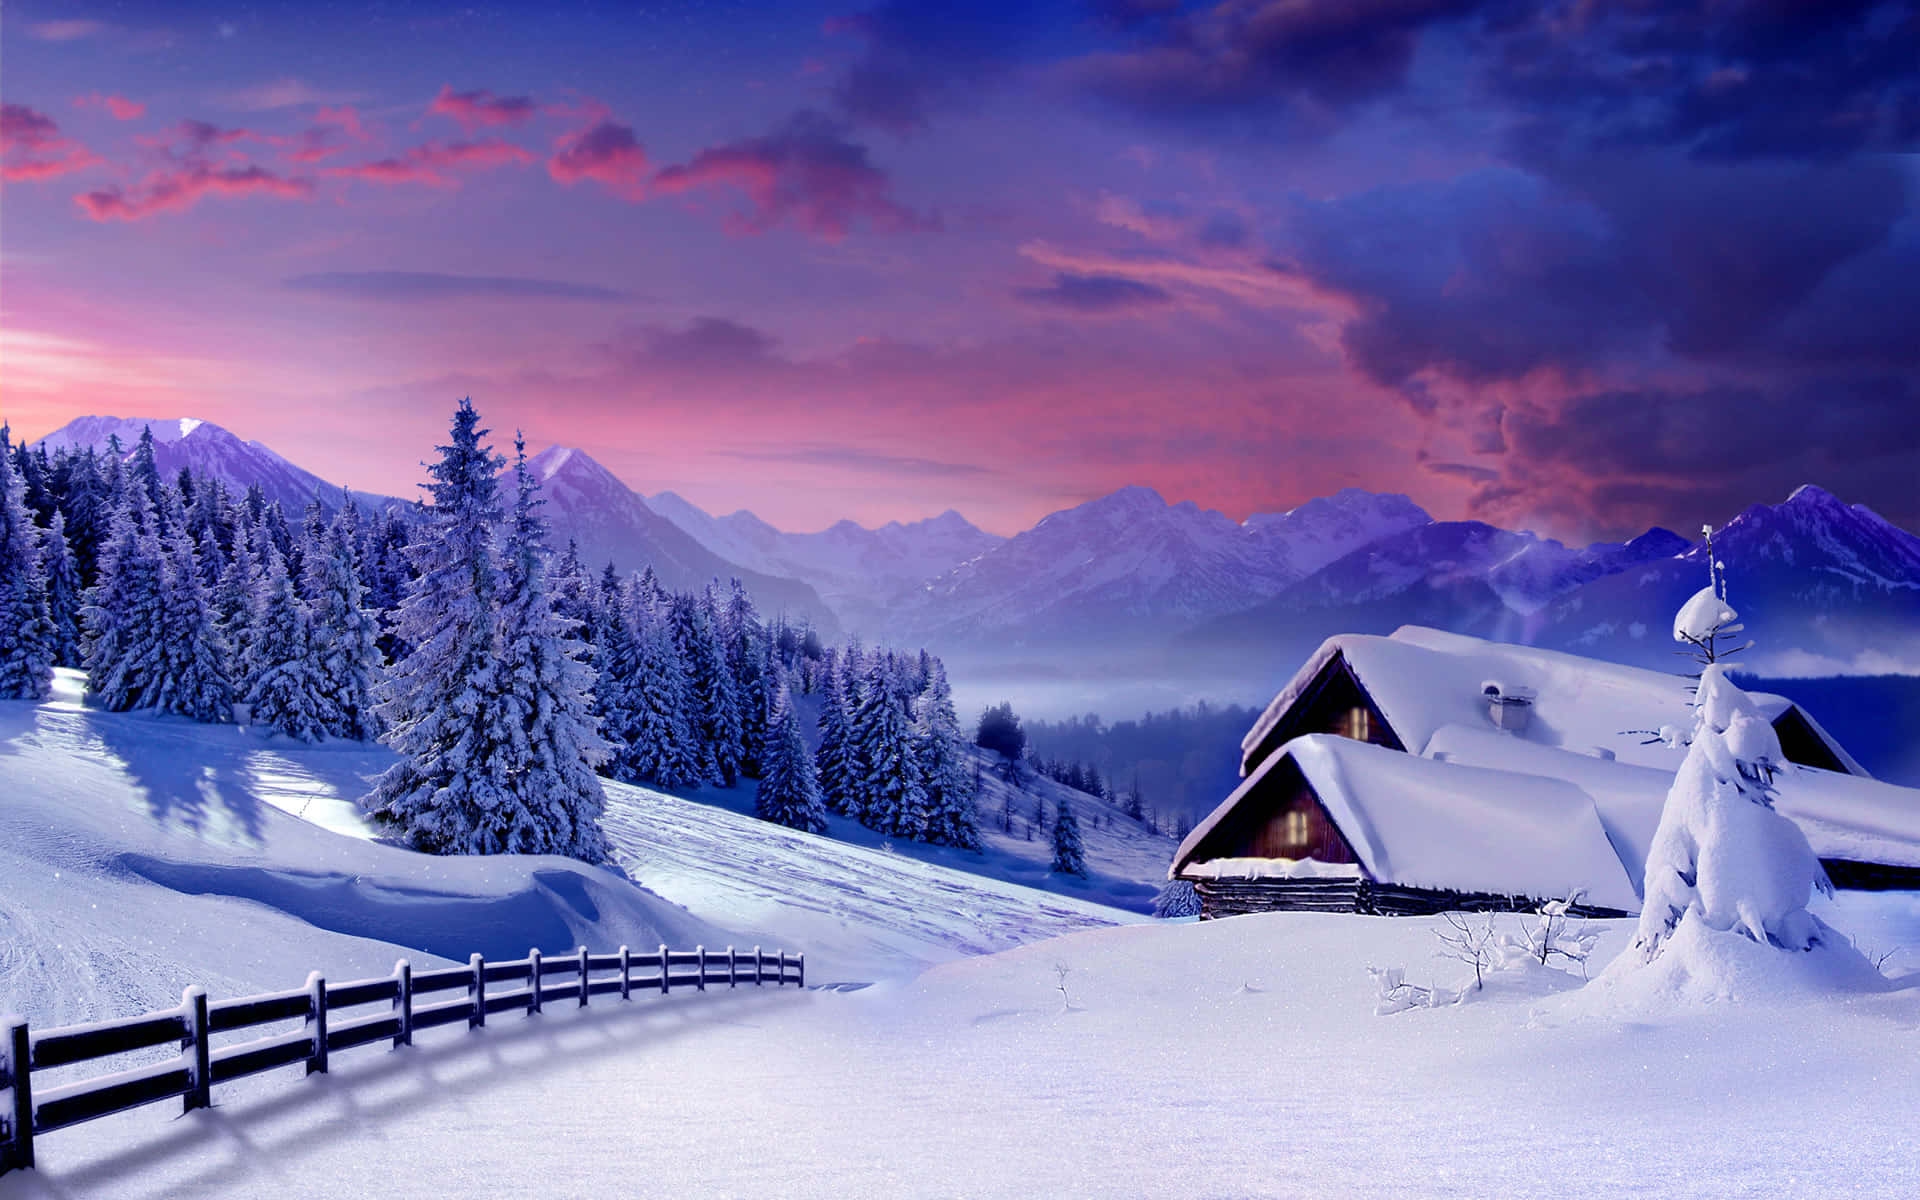 Enjoy the beauty of winter from the comfort of your desktop Wallpaper